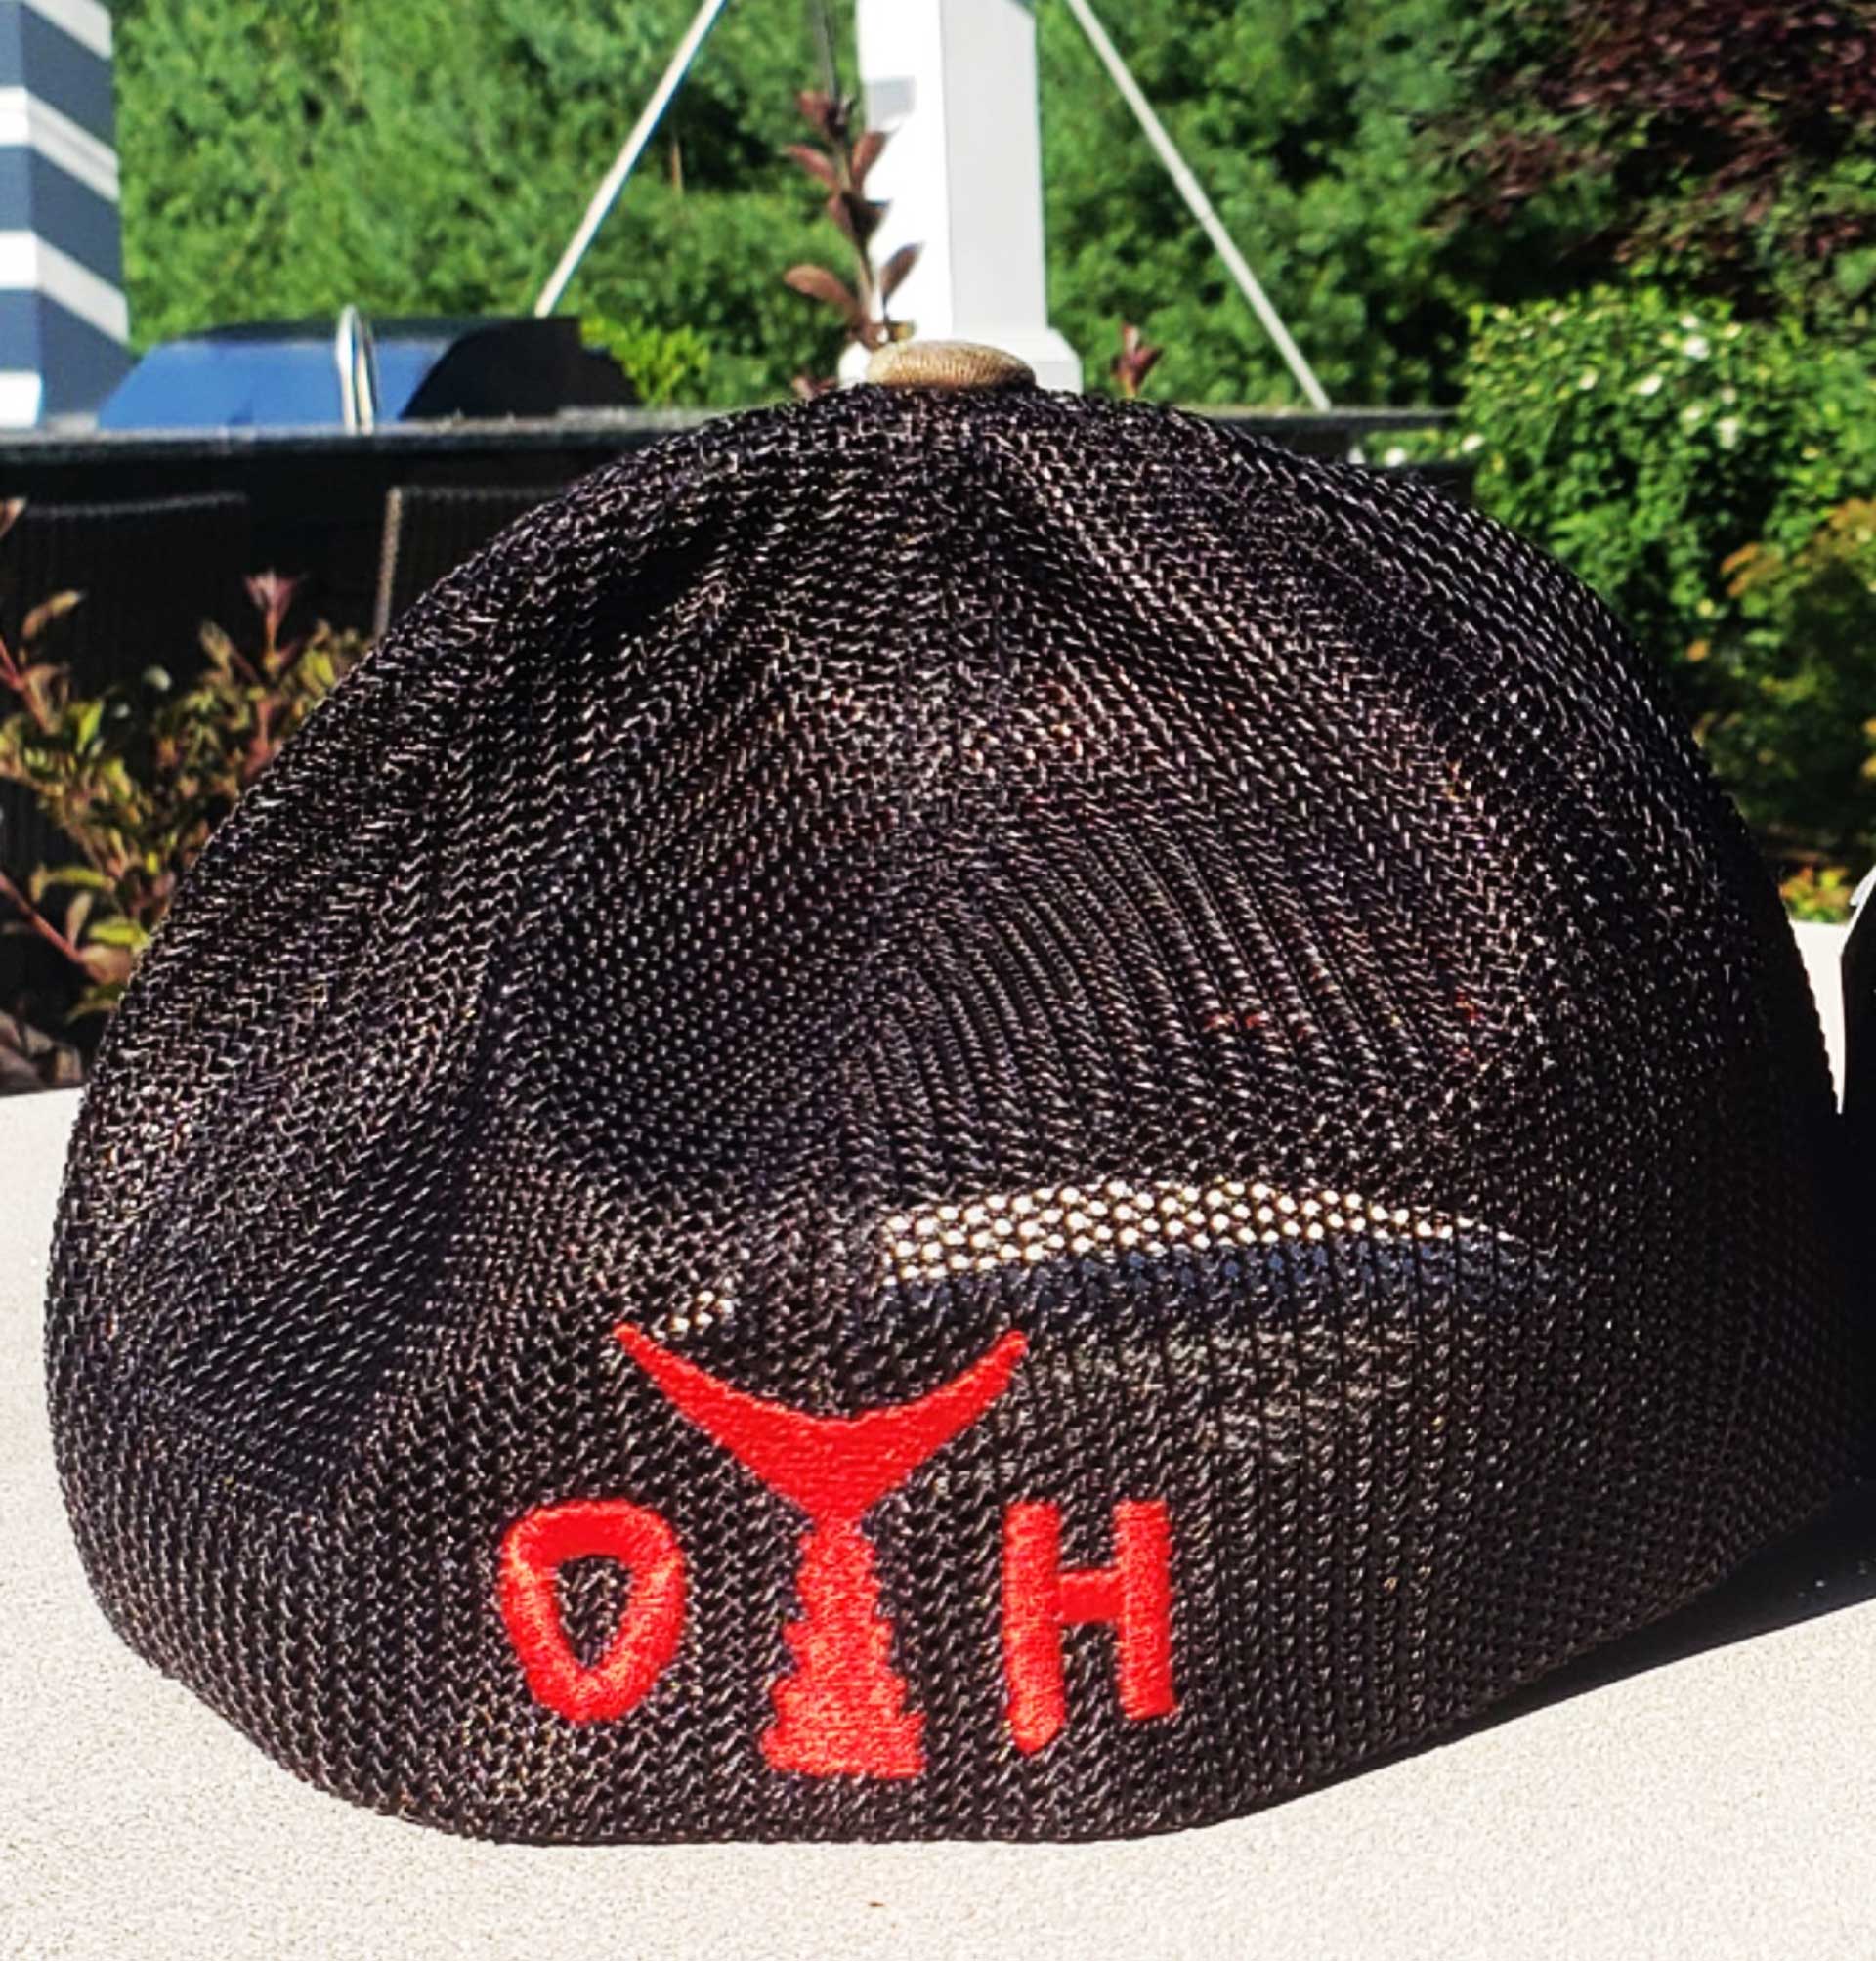 O.T.H. Flag Camoflauge Fitted Hat w black mesh backing OTH Logo on back